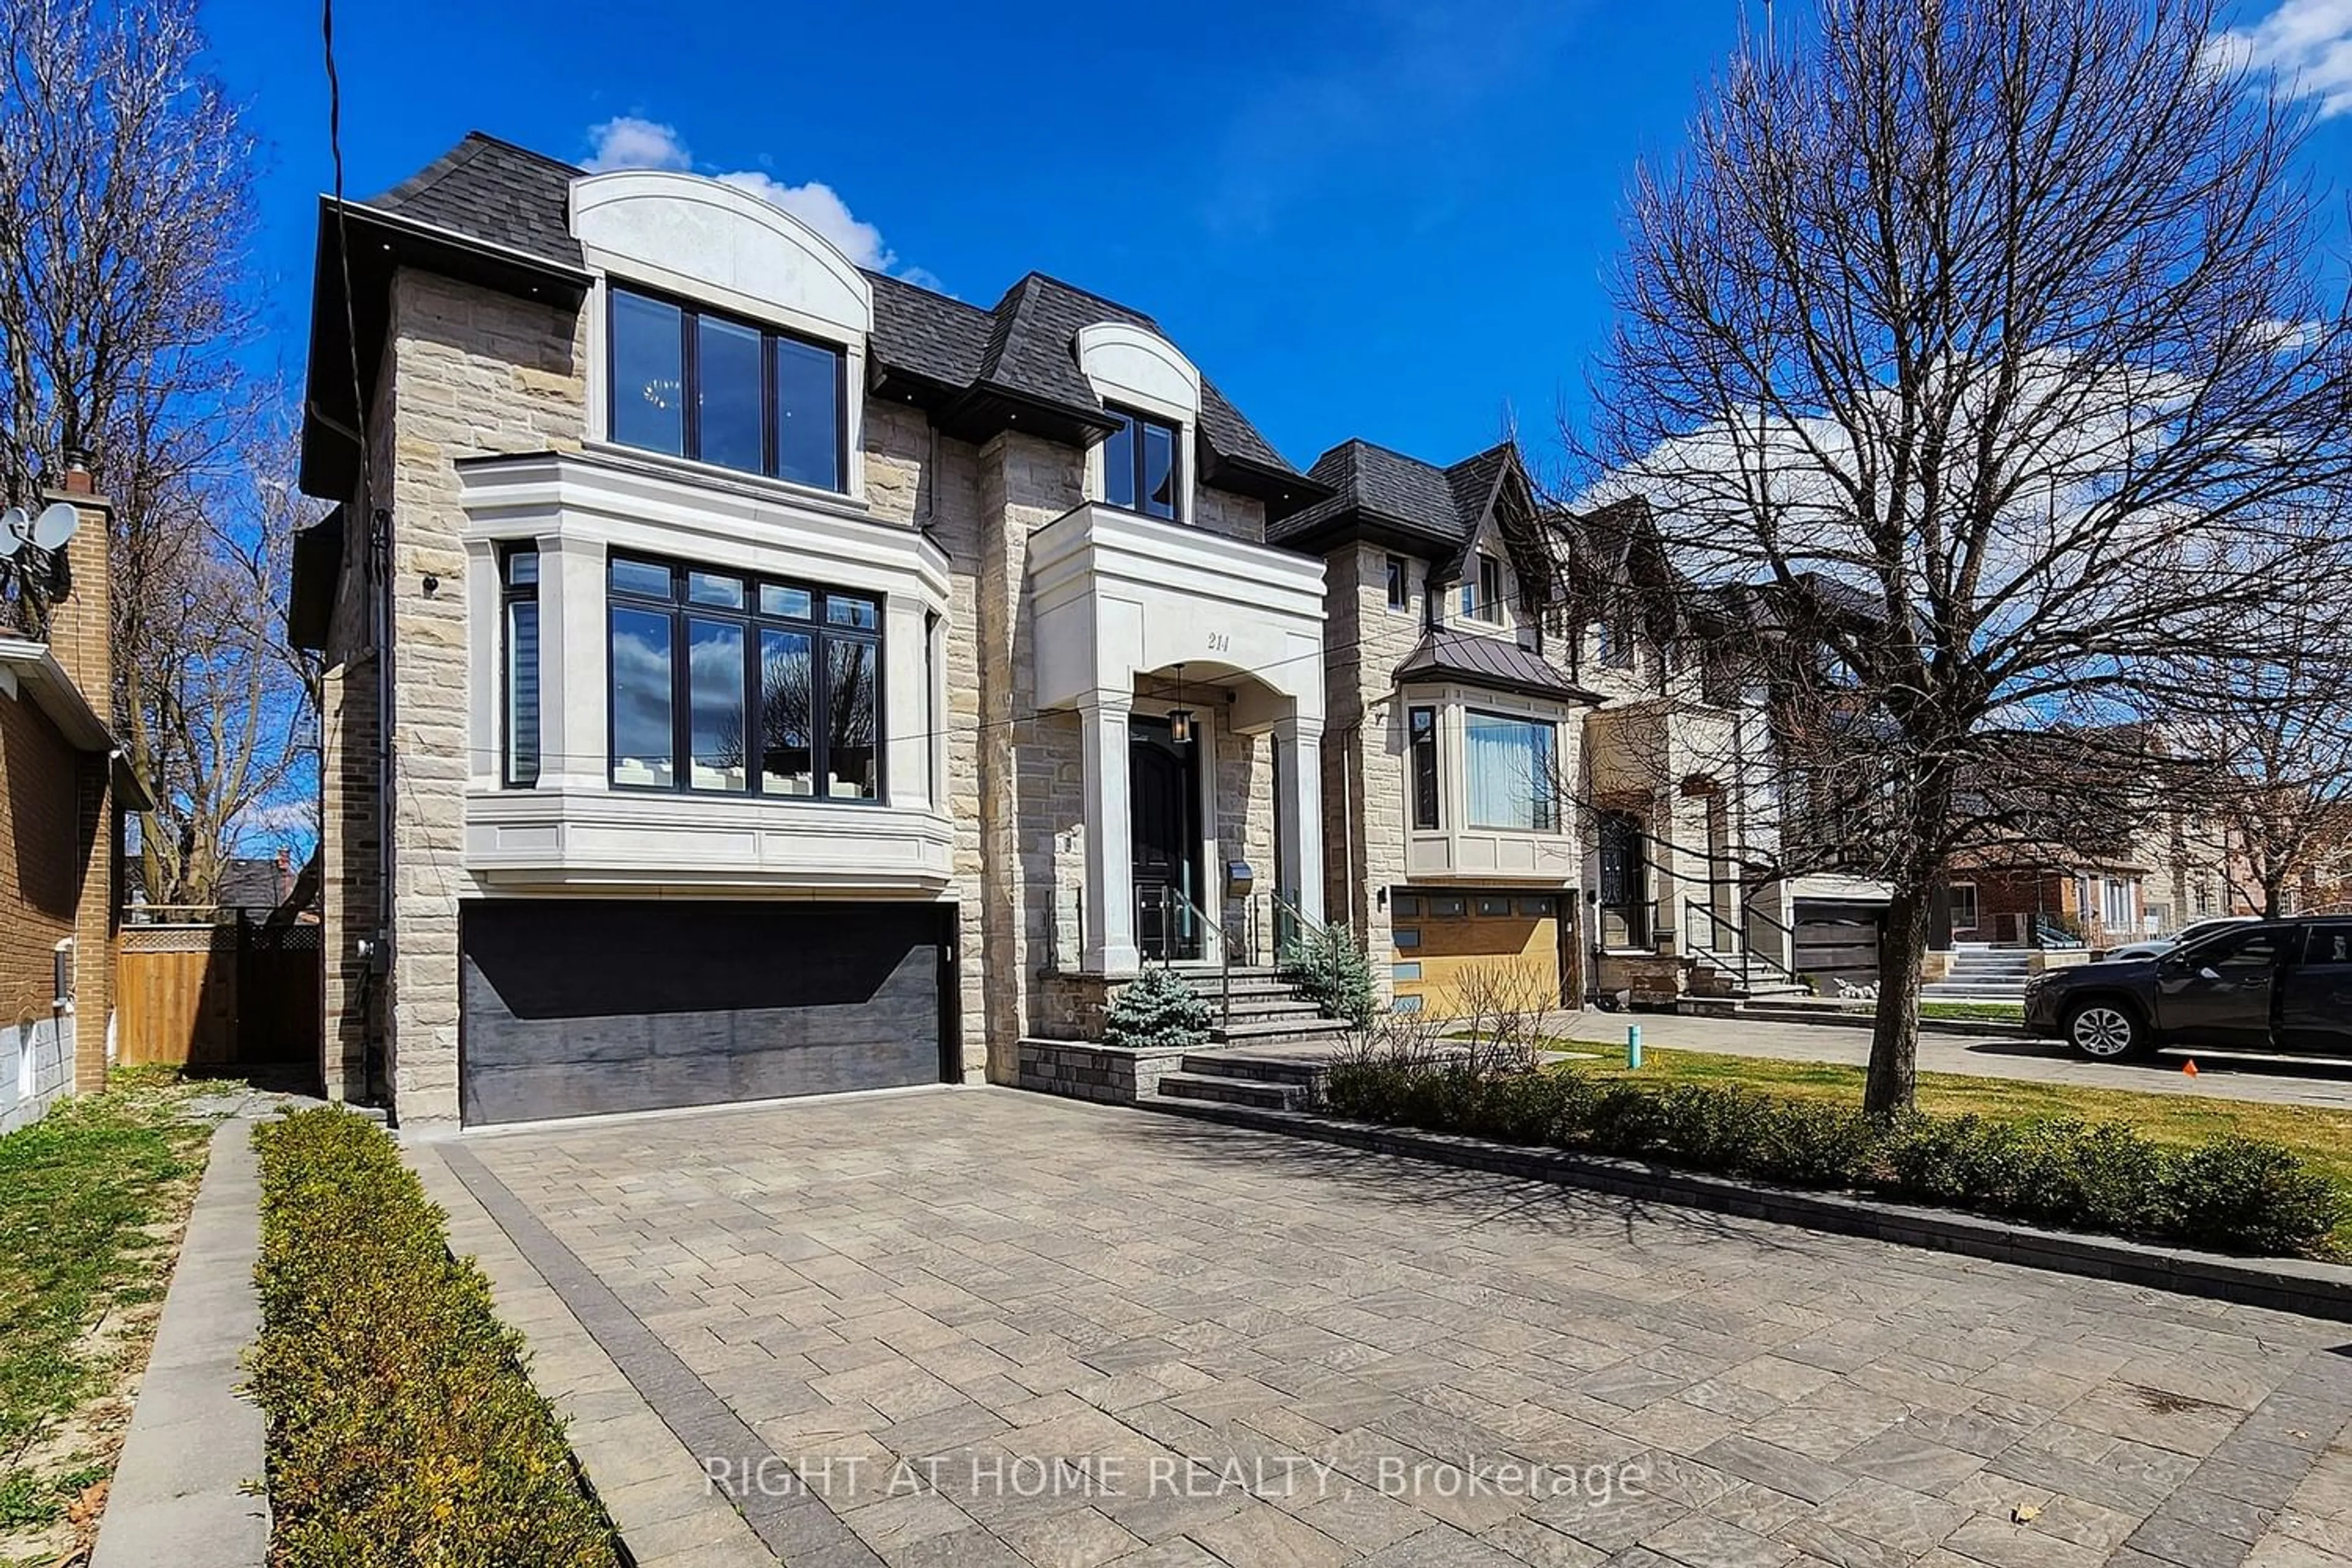 Home with brick exterior material for 214 Patricia Ave, Toronto Ontario M2M 1J5